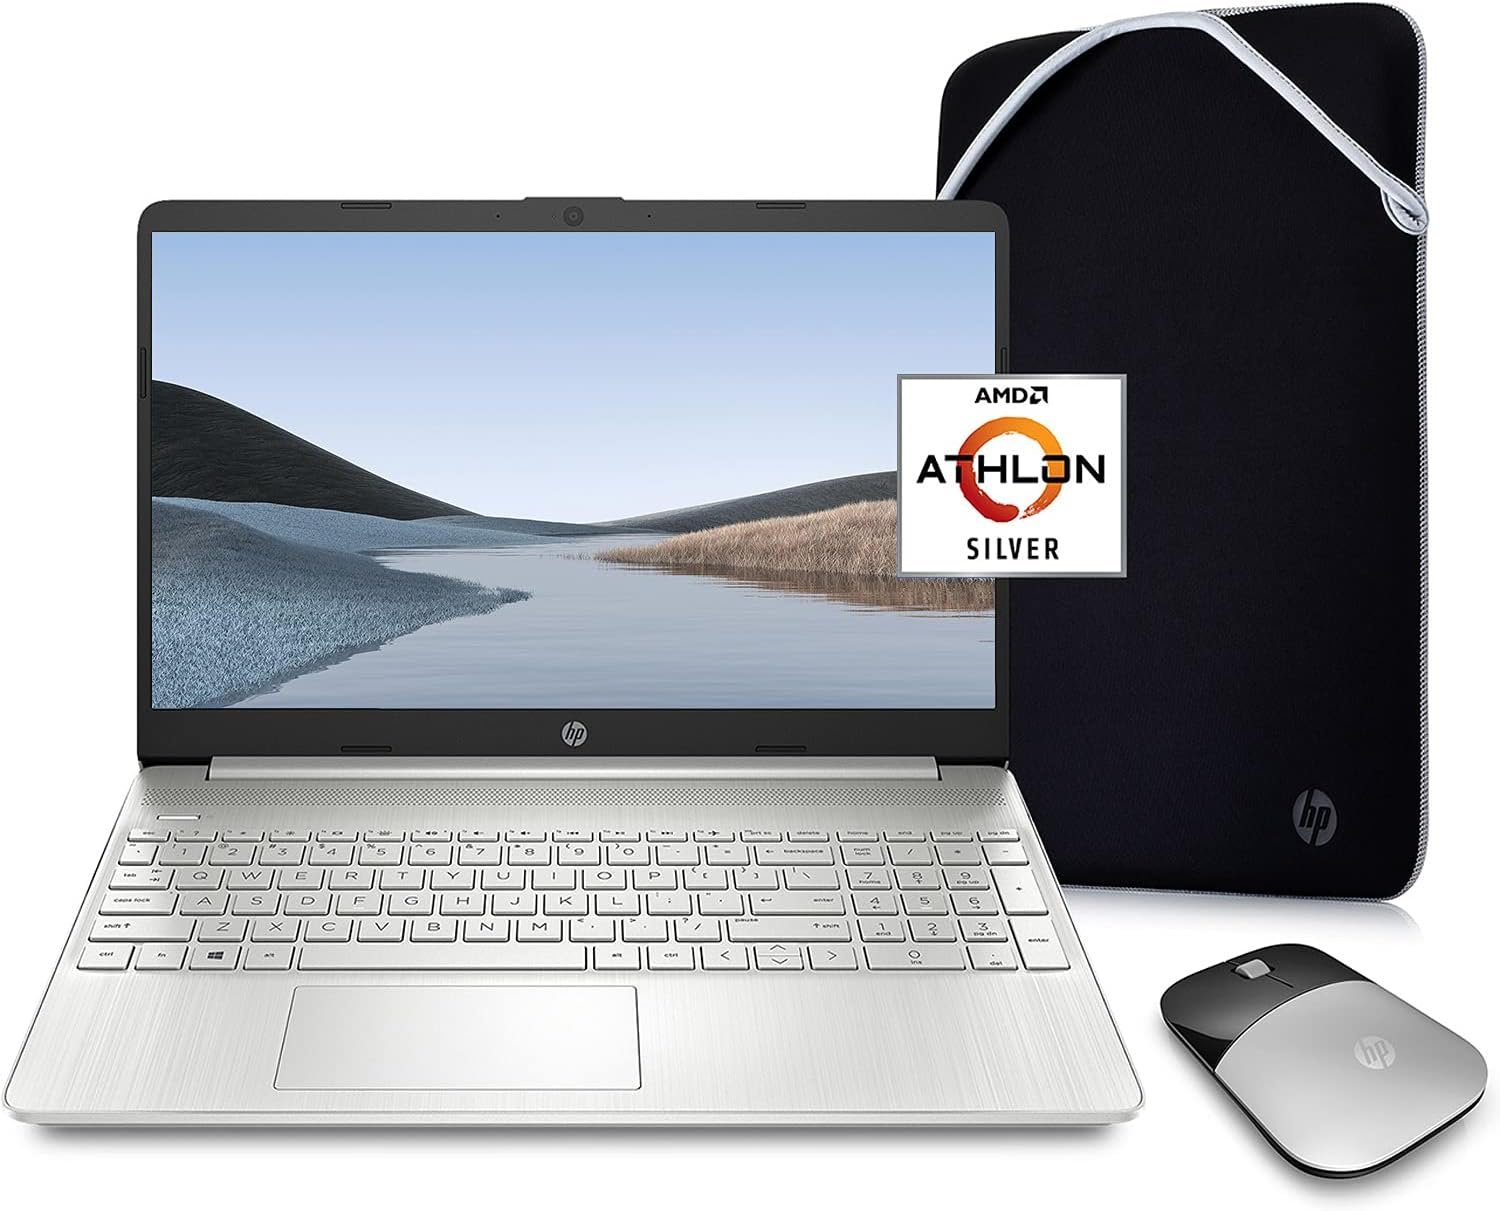 HP Pavilion Laptop (2021 Latest Model)